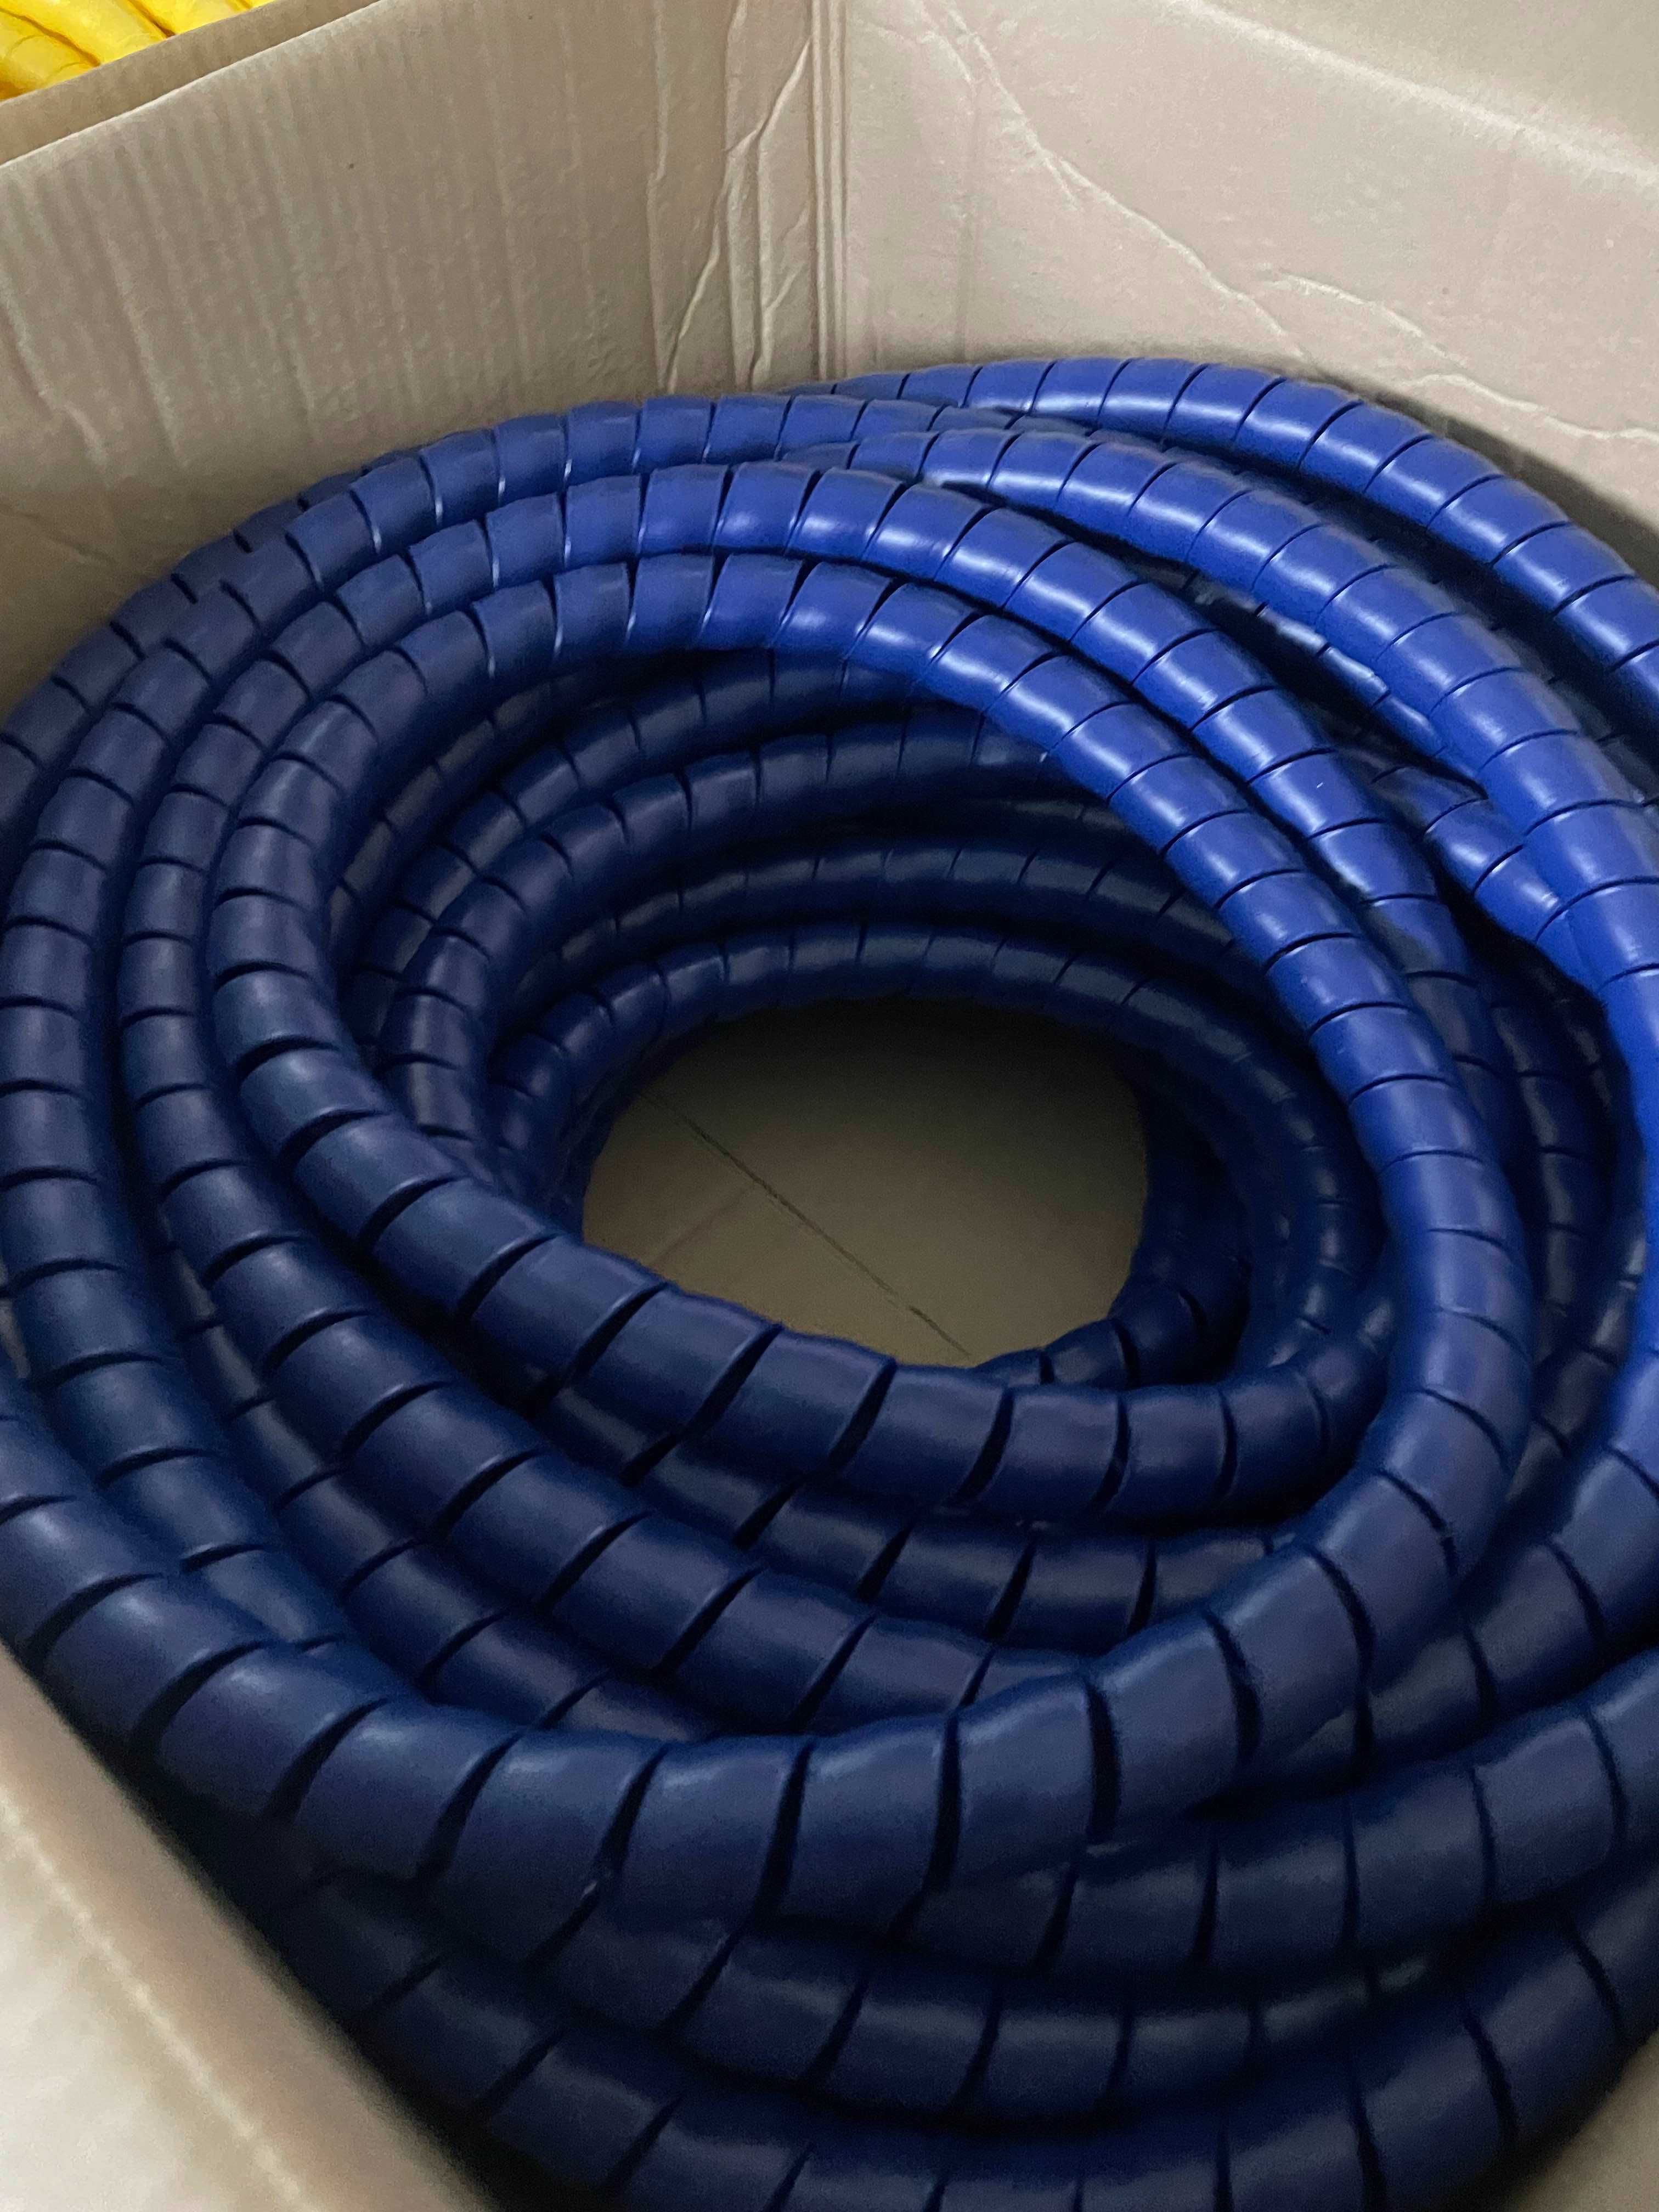 Spirala plastic protectie furtunuri  culor rosu albastru galben